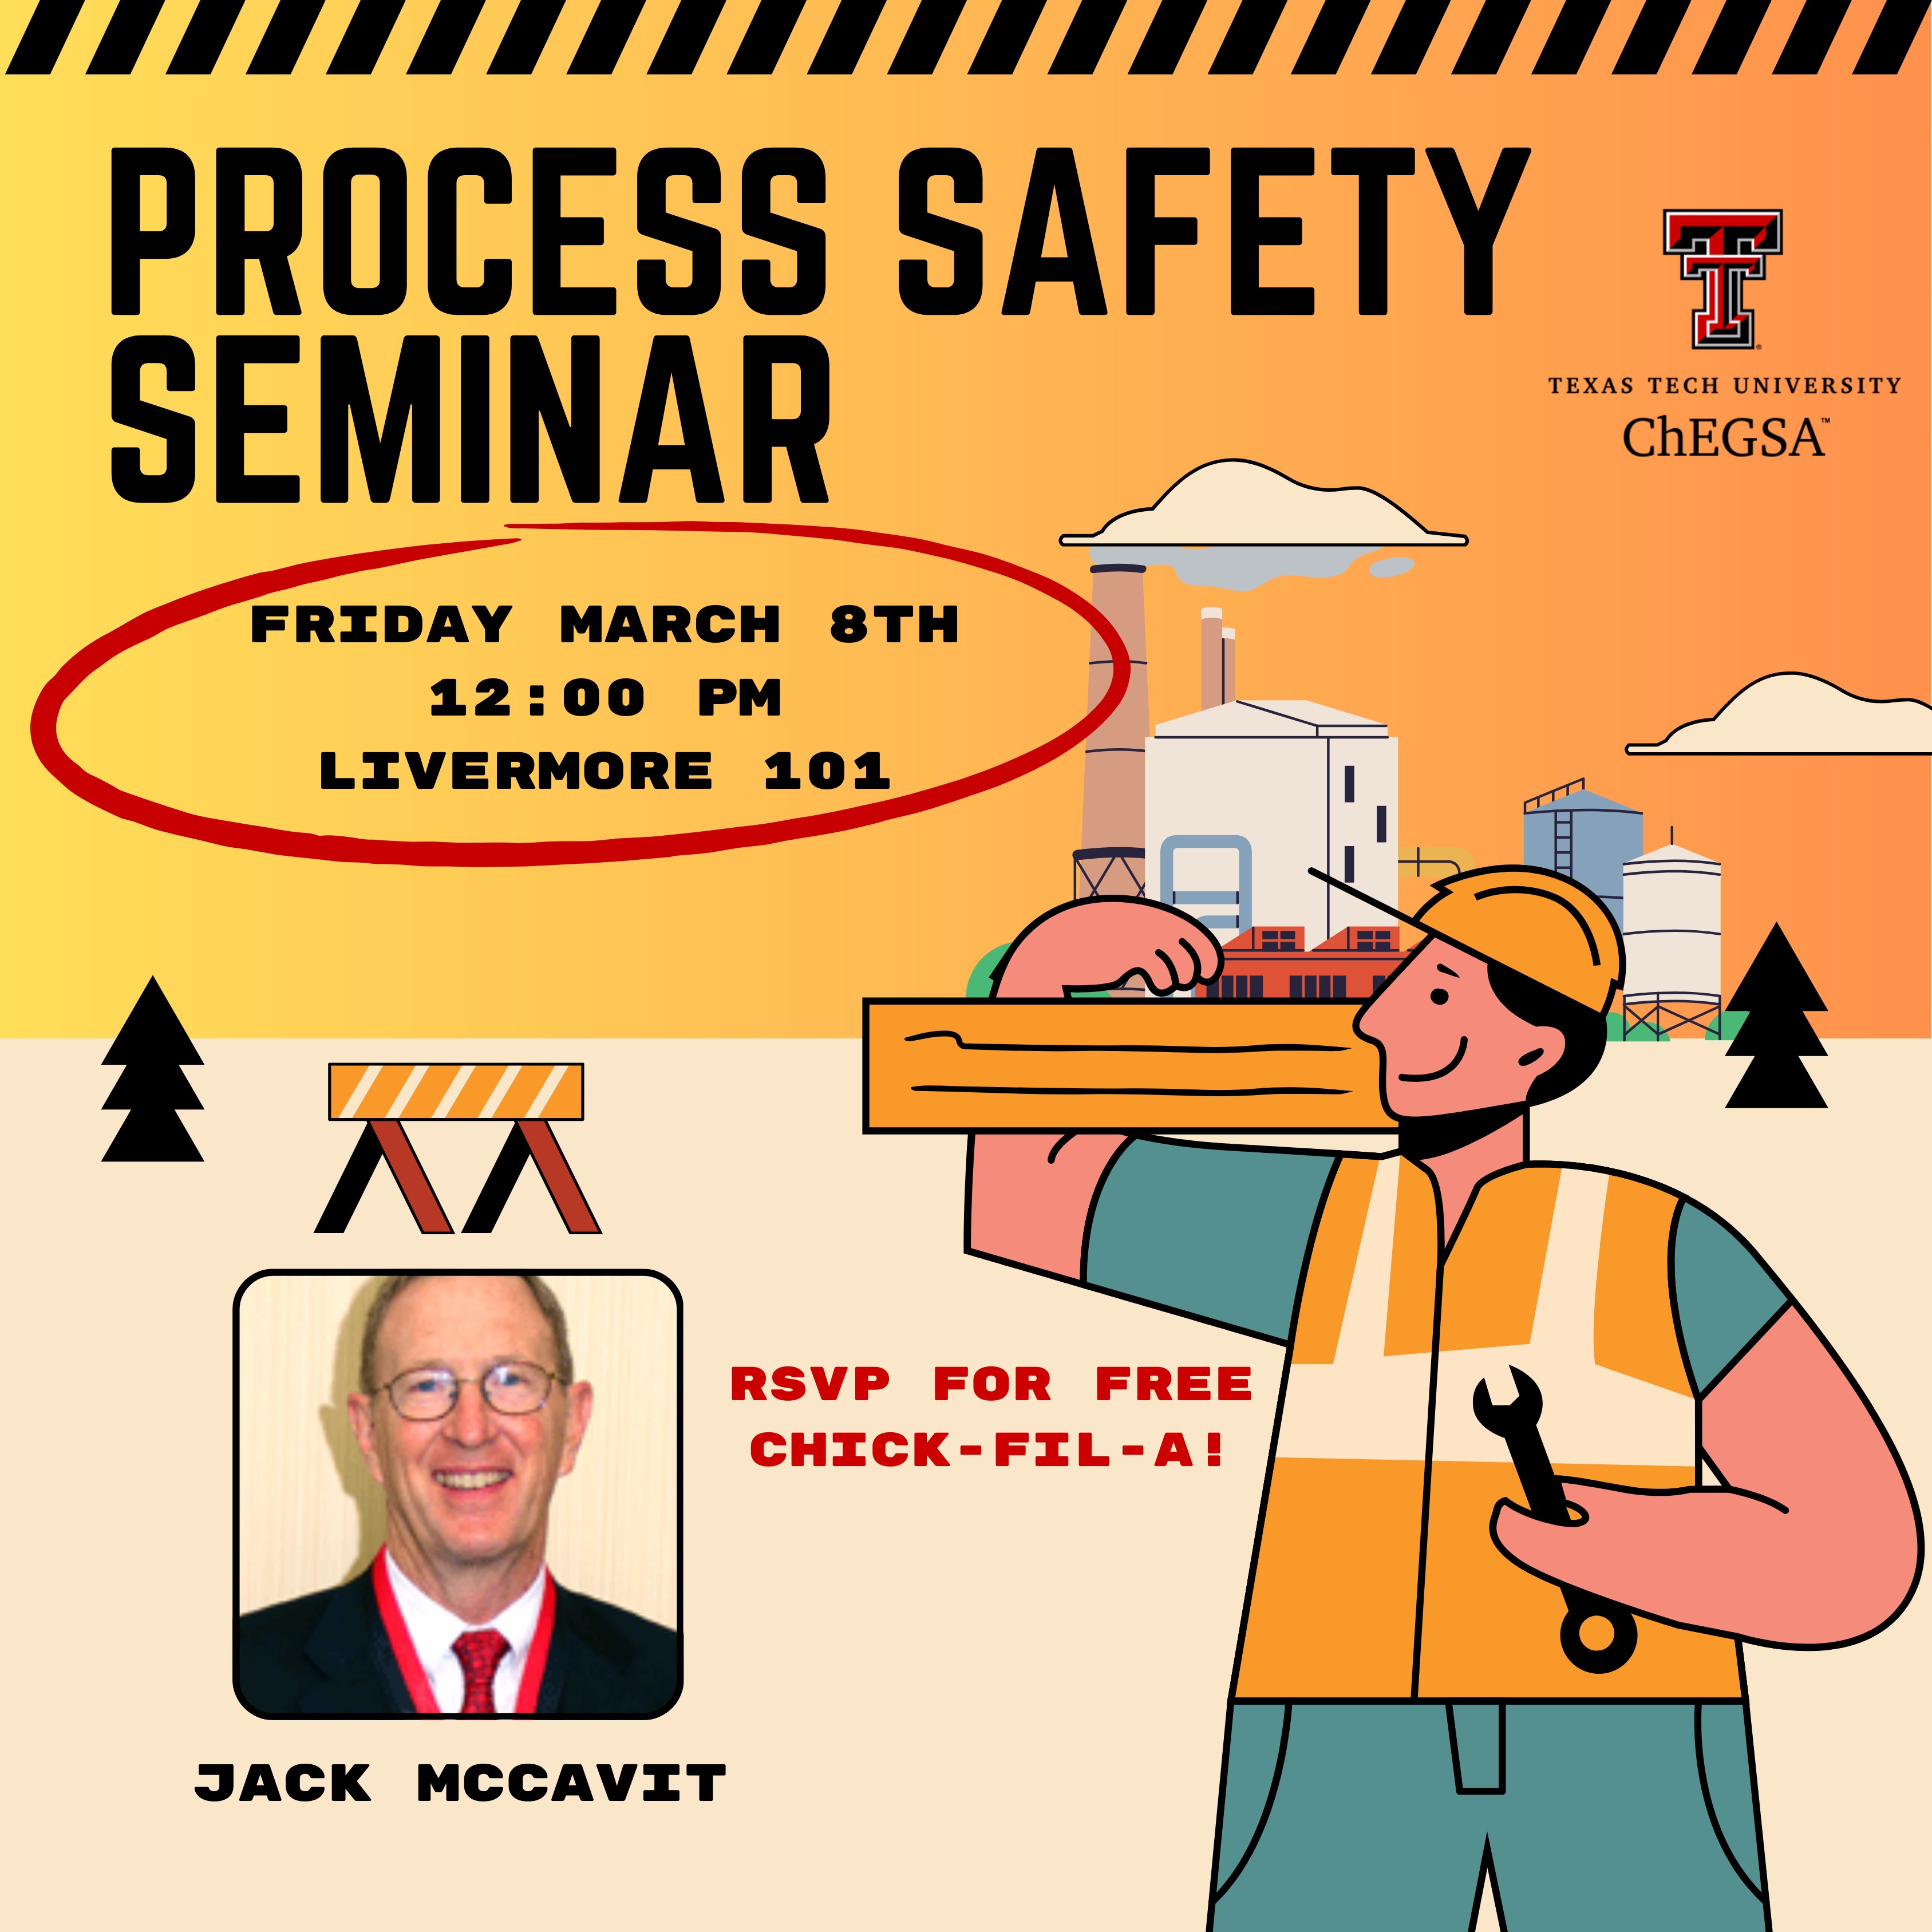 Safety Seminar announcement